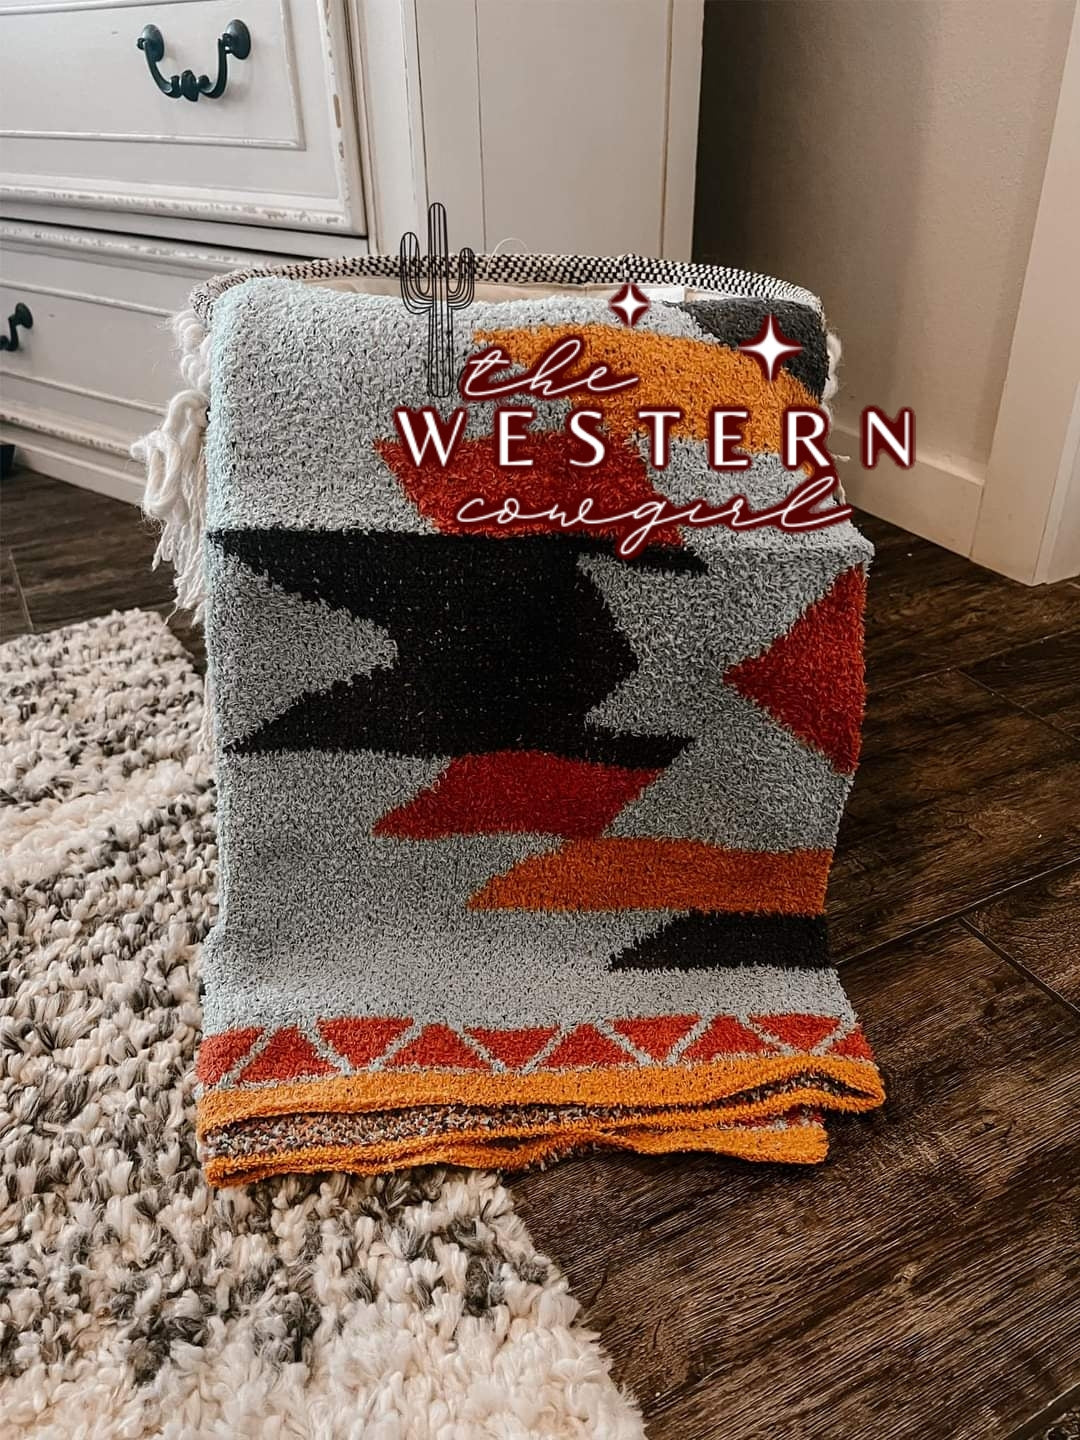 Western Plush blanket